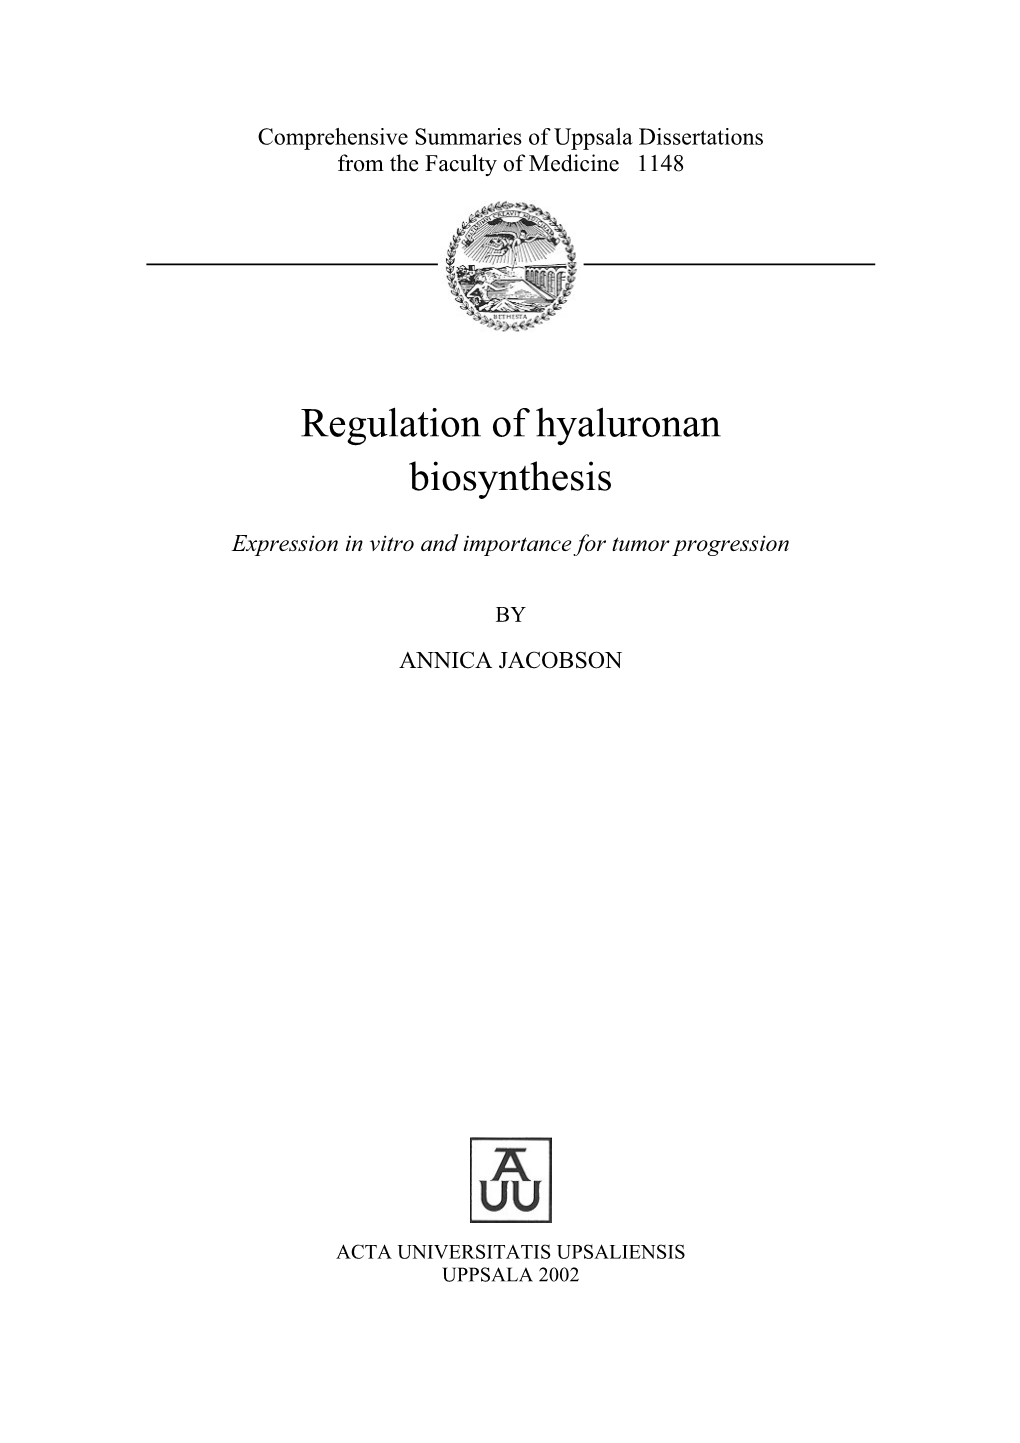 Regulation of Hyaluronan Biosynthesis